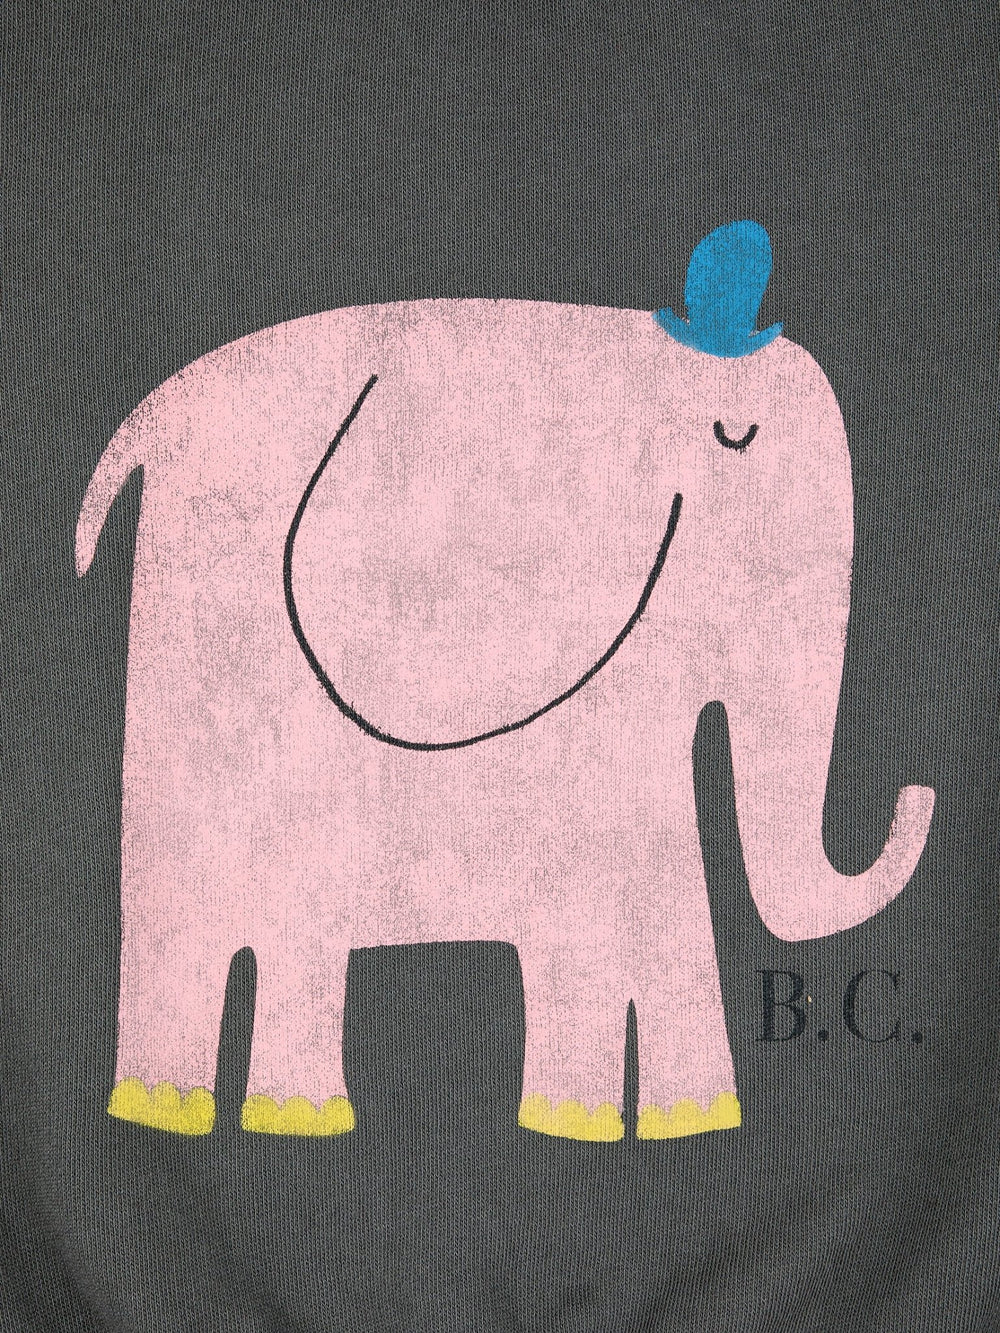 The Elephant Sweatshirt - 940 - Posh New York